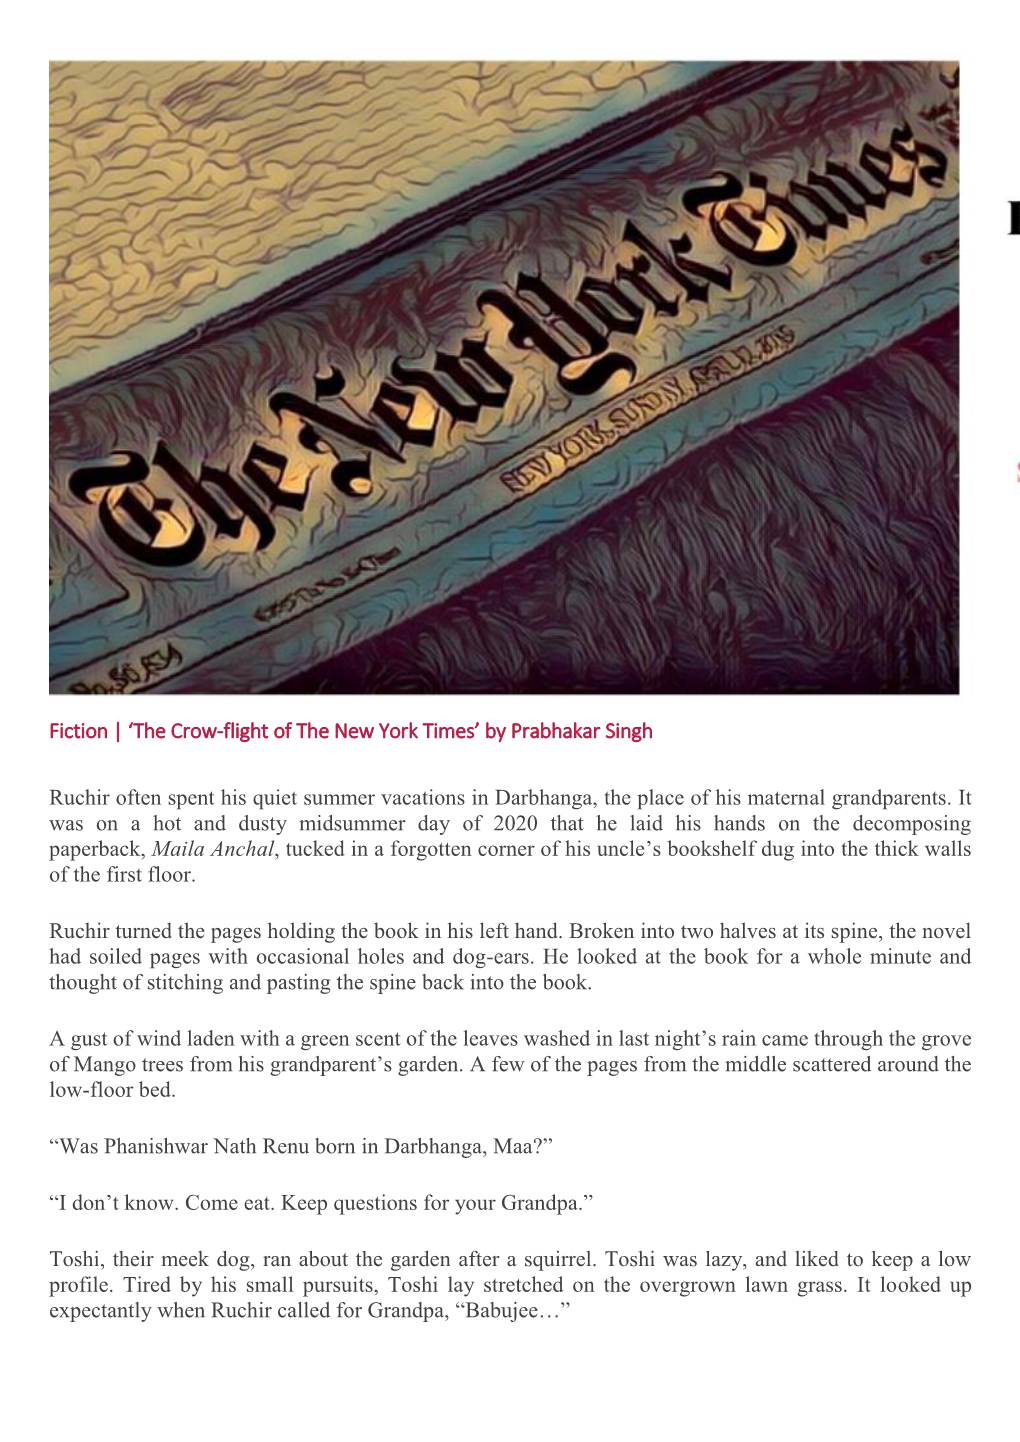 Fiction | 'The Crow-Flight of the New York Times' by Prabhakar Singh